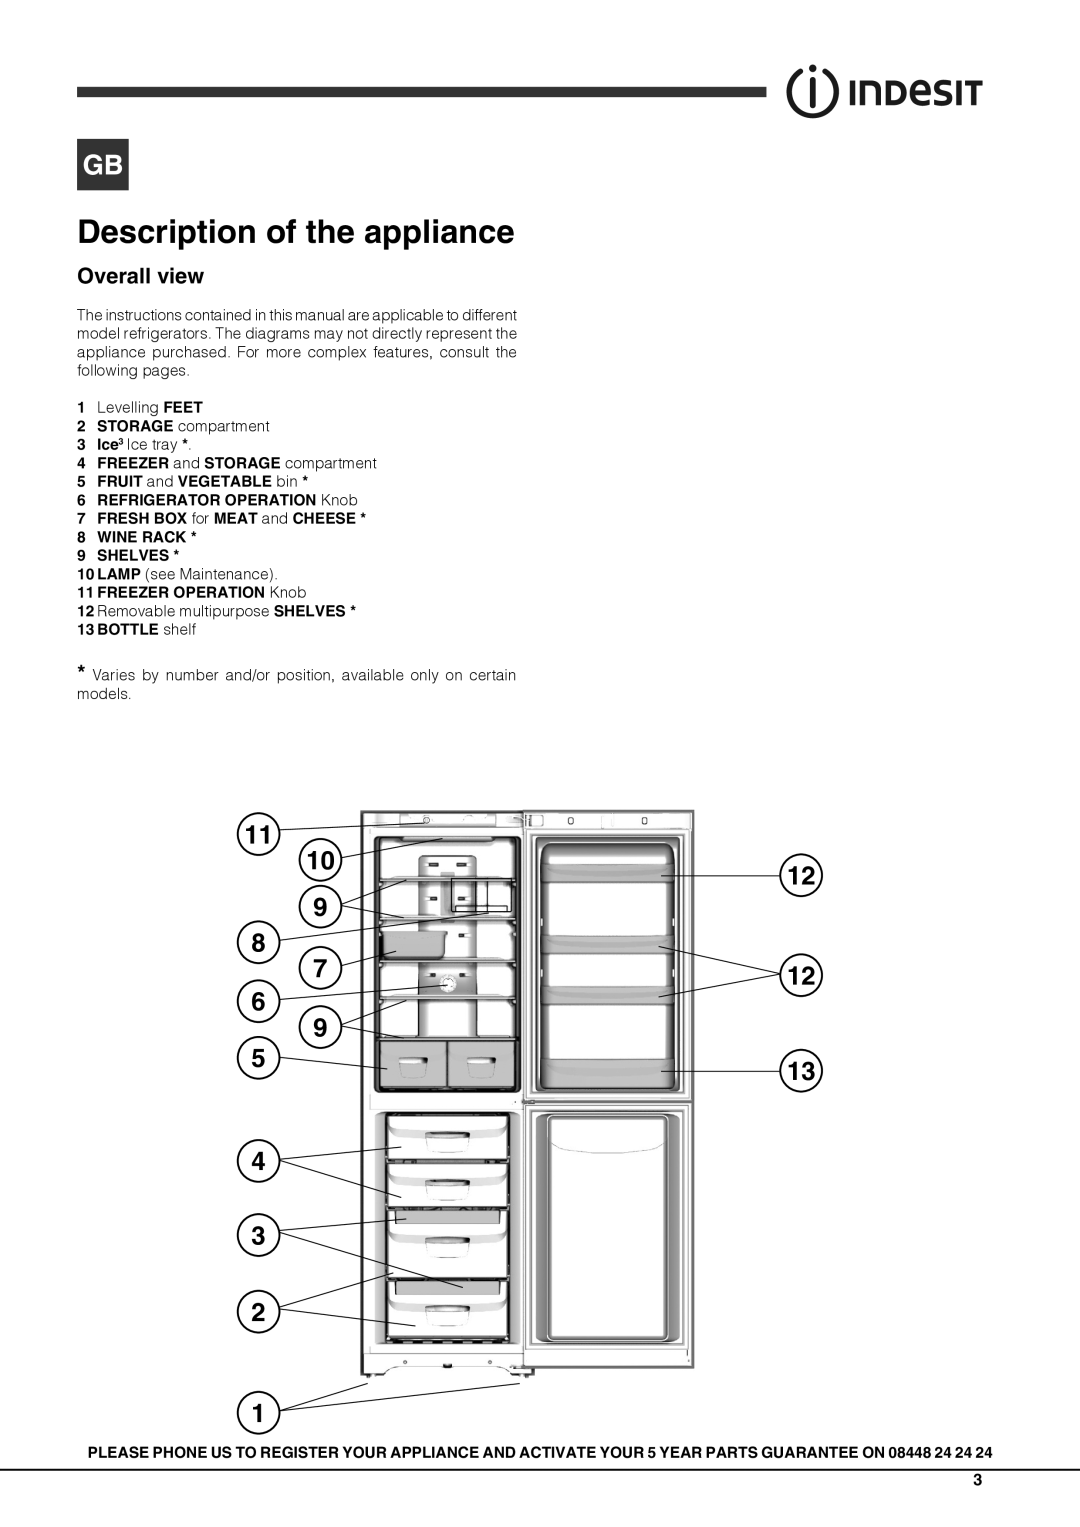 Indesit BIAAXXXX, IBXXAXX Description of the appliance, 1012, Overall view, WINE RACK 9 SHELVES, FREEZER OPERATION Knob 